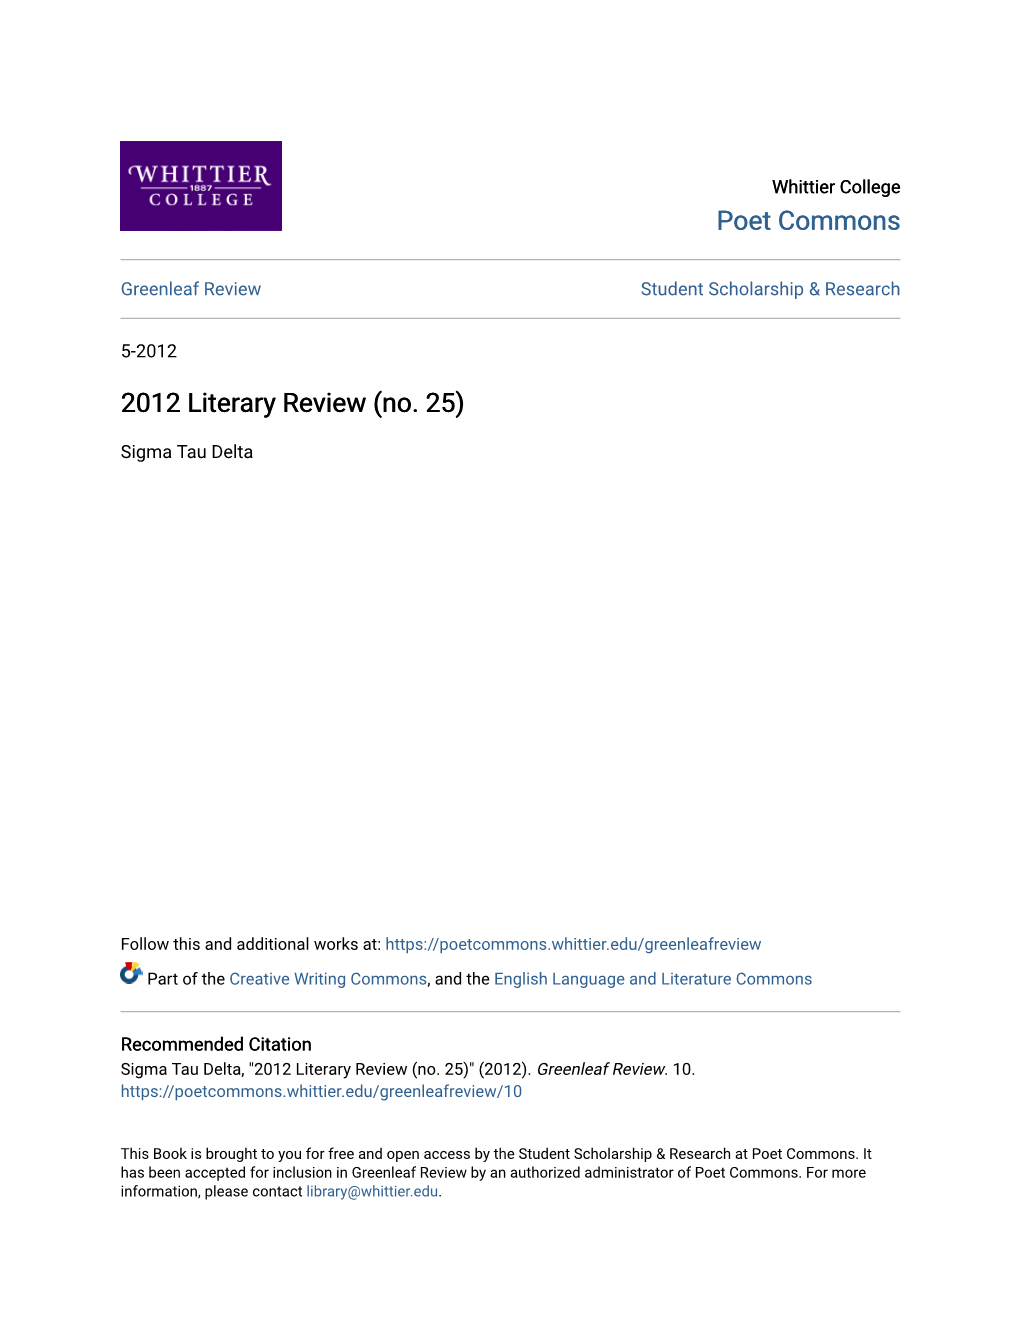 2012 Literary Review (No. 25)